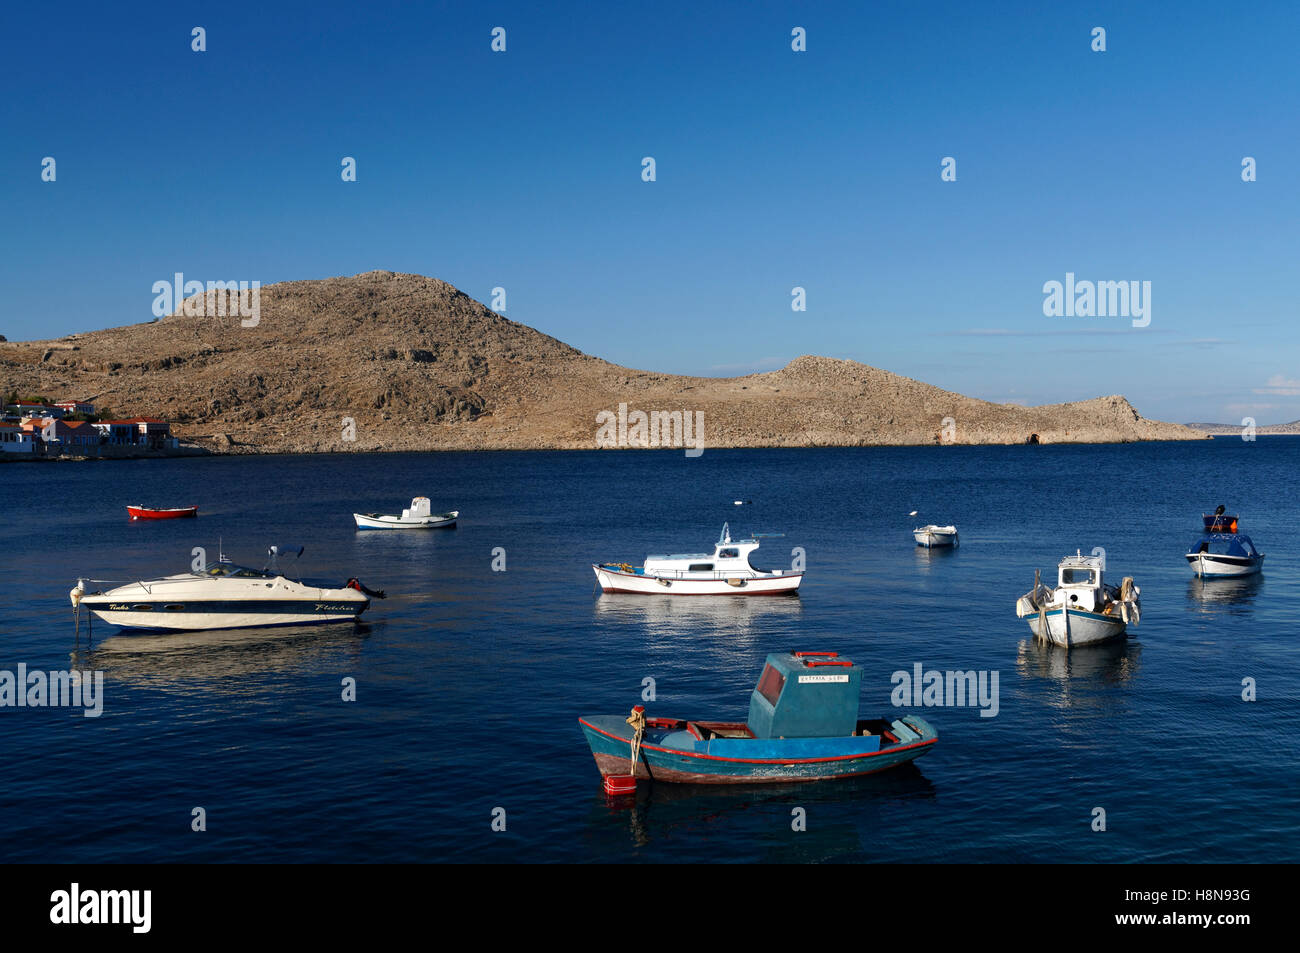 Small blue fishing boat, Village of Emborio, Chalki Island near Rhodes, Dodecanese Islands, Greece. Stock Photo